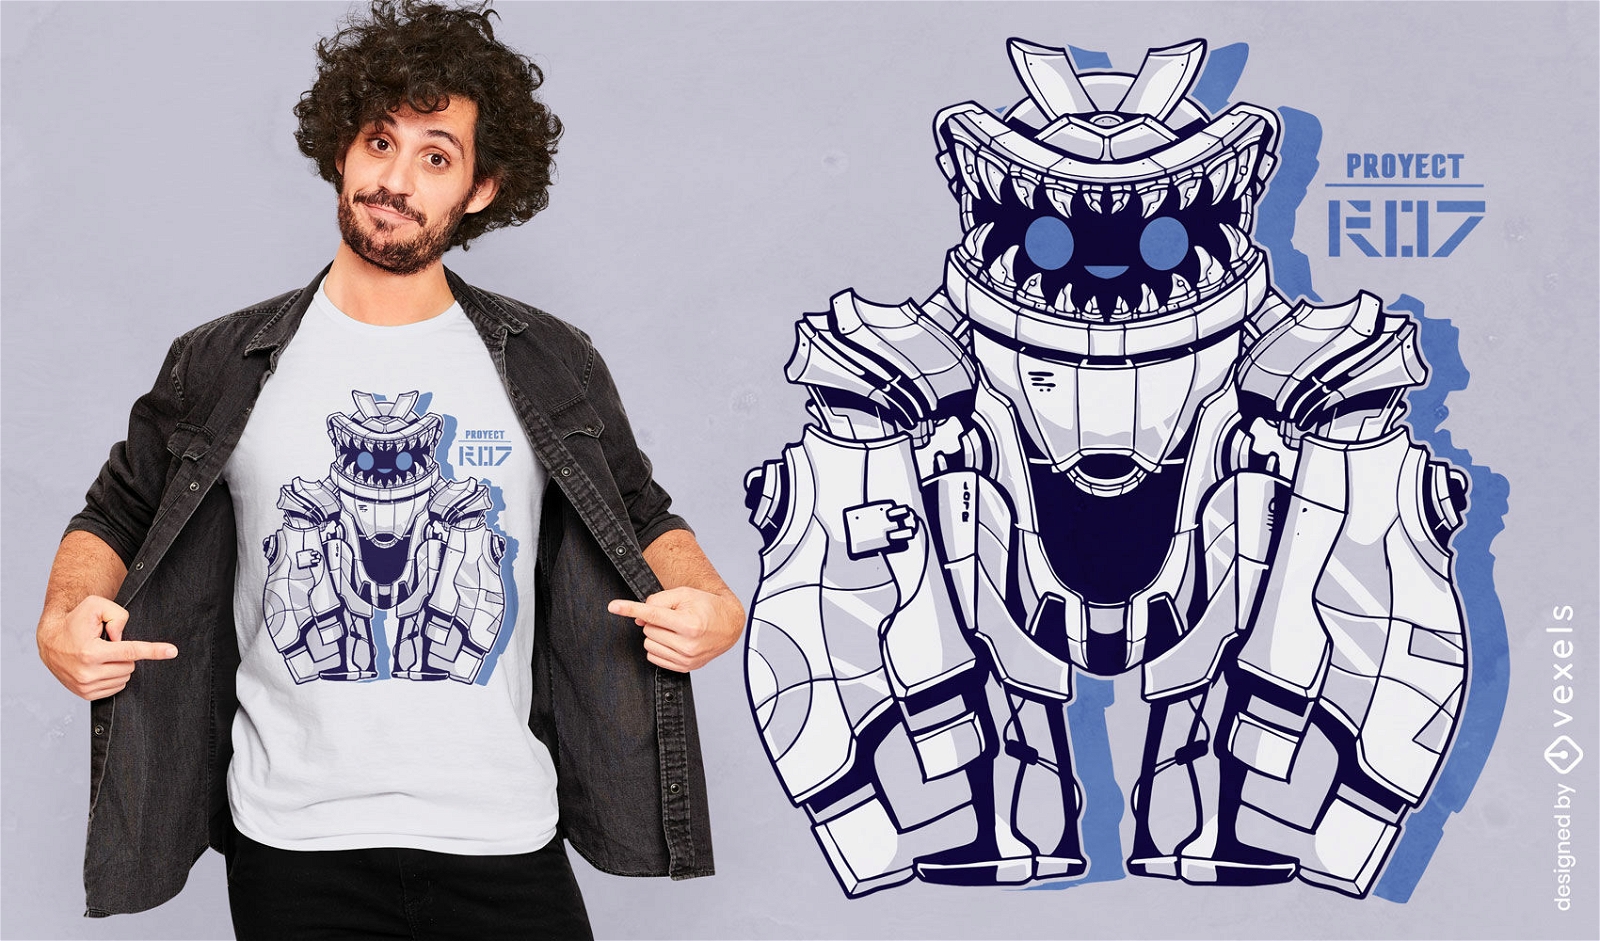 Big robot technological monster t-shirt design